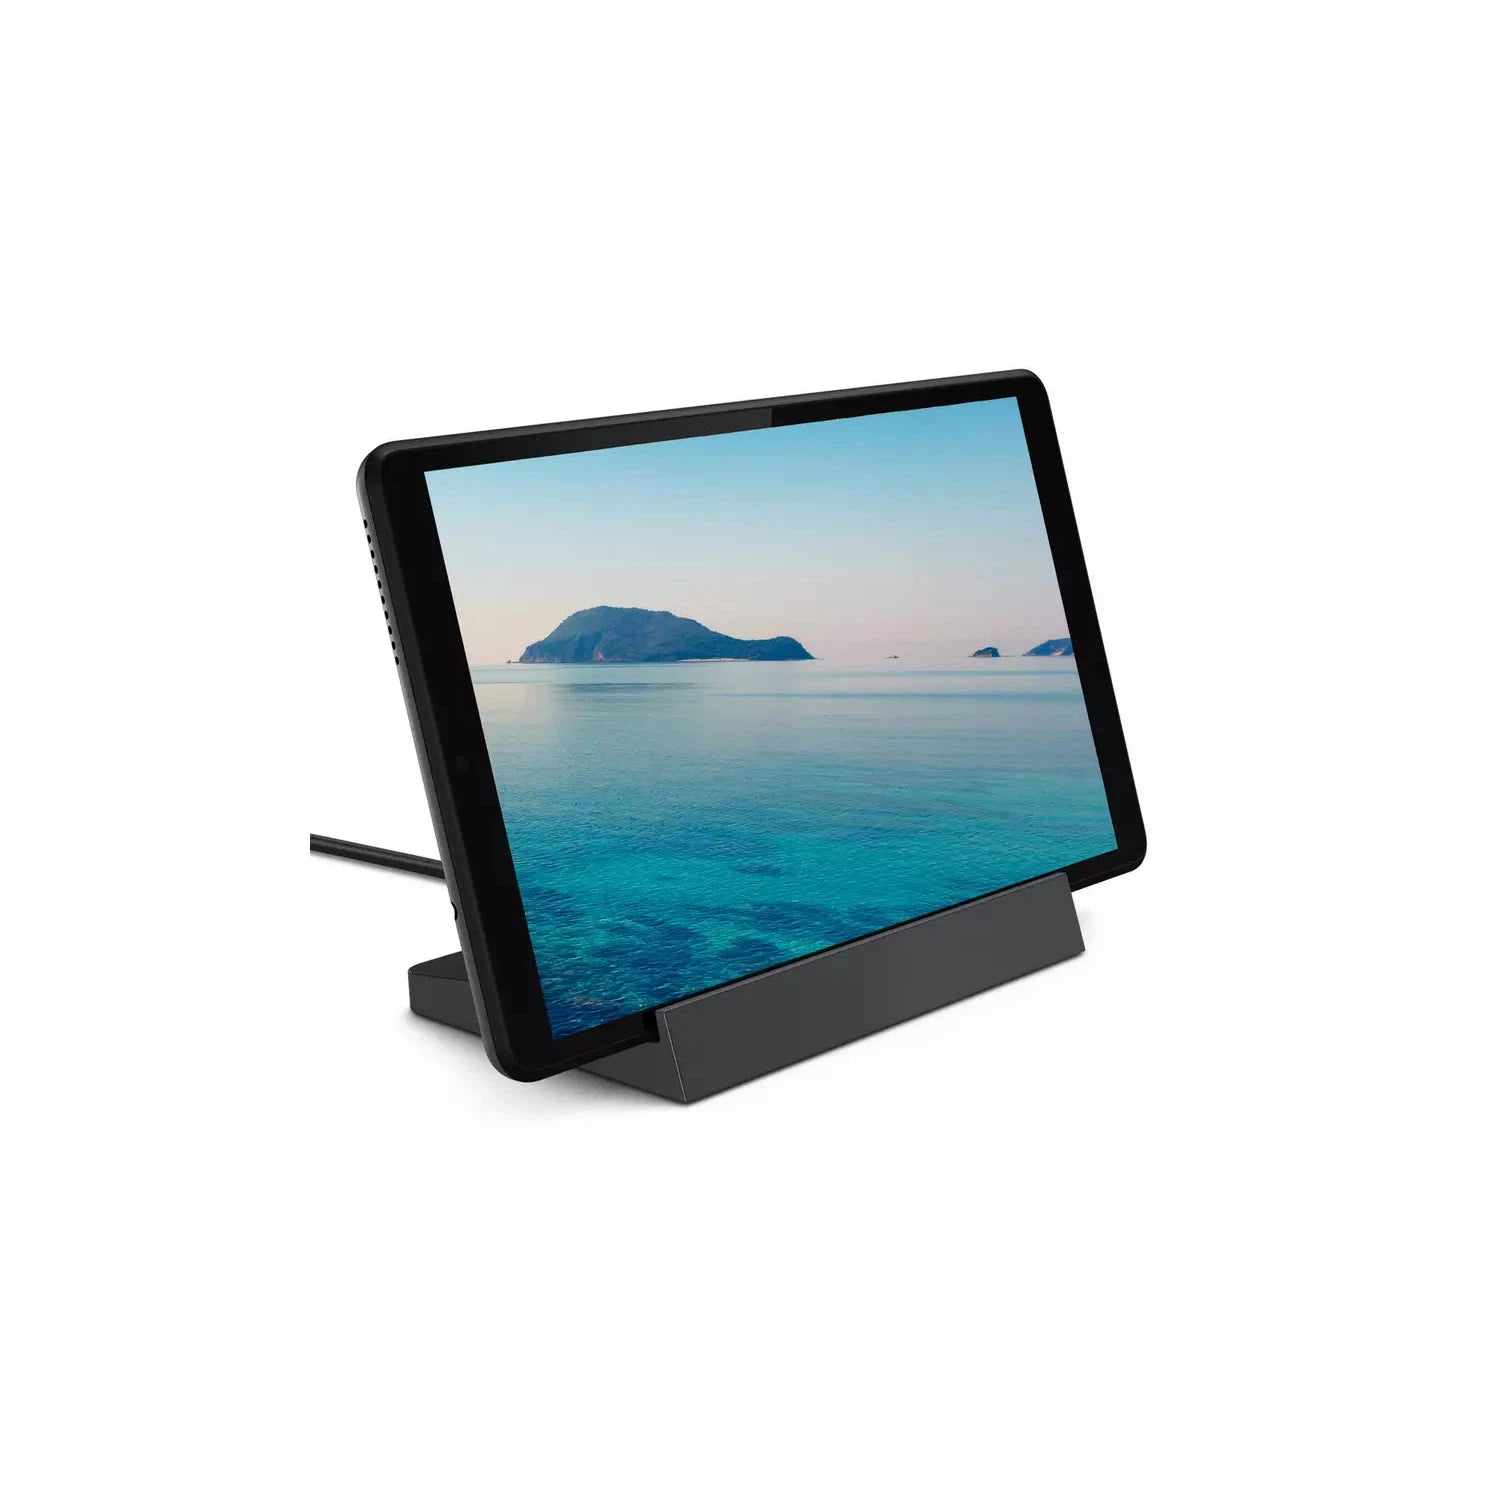 Lenovo M8 Smart Tab 8", 32GB Tablet - Grey (TB-8505XS) - Refurbished Excellent